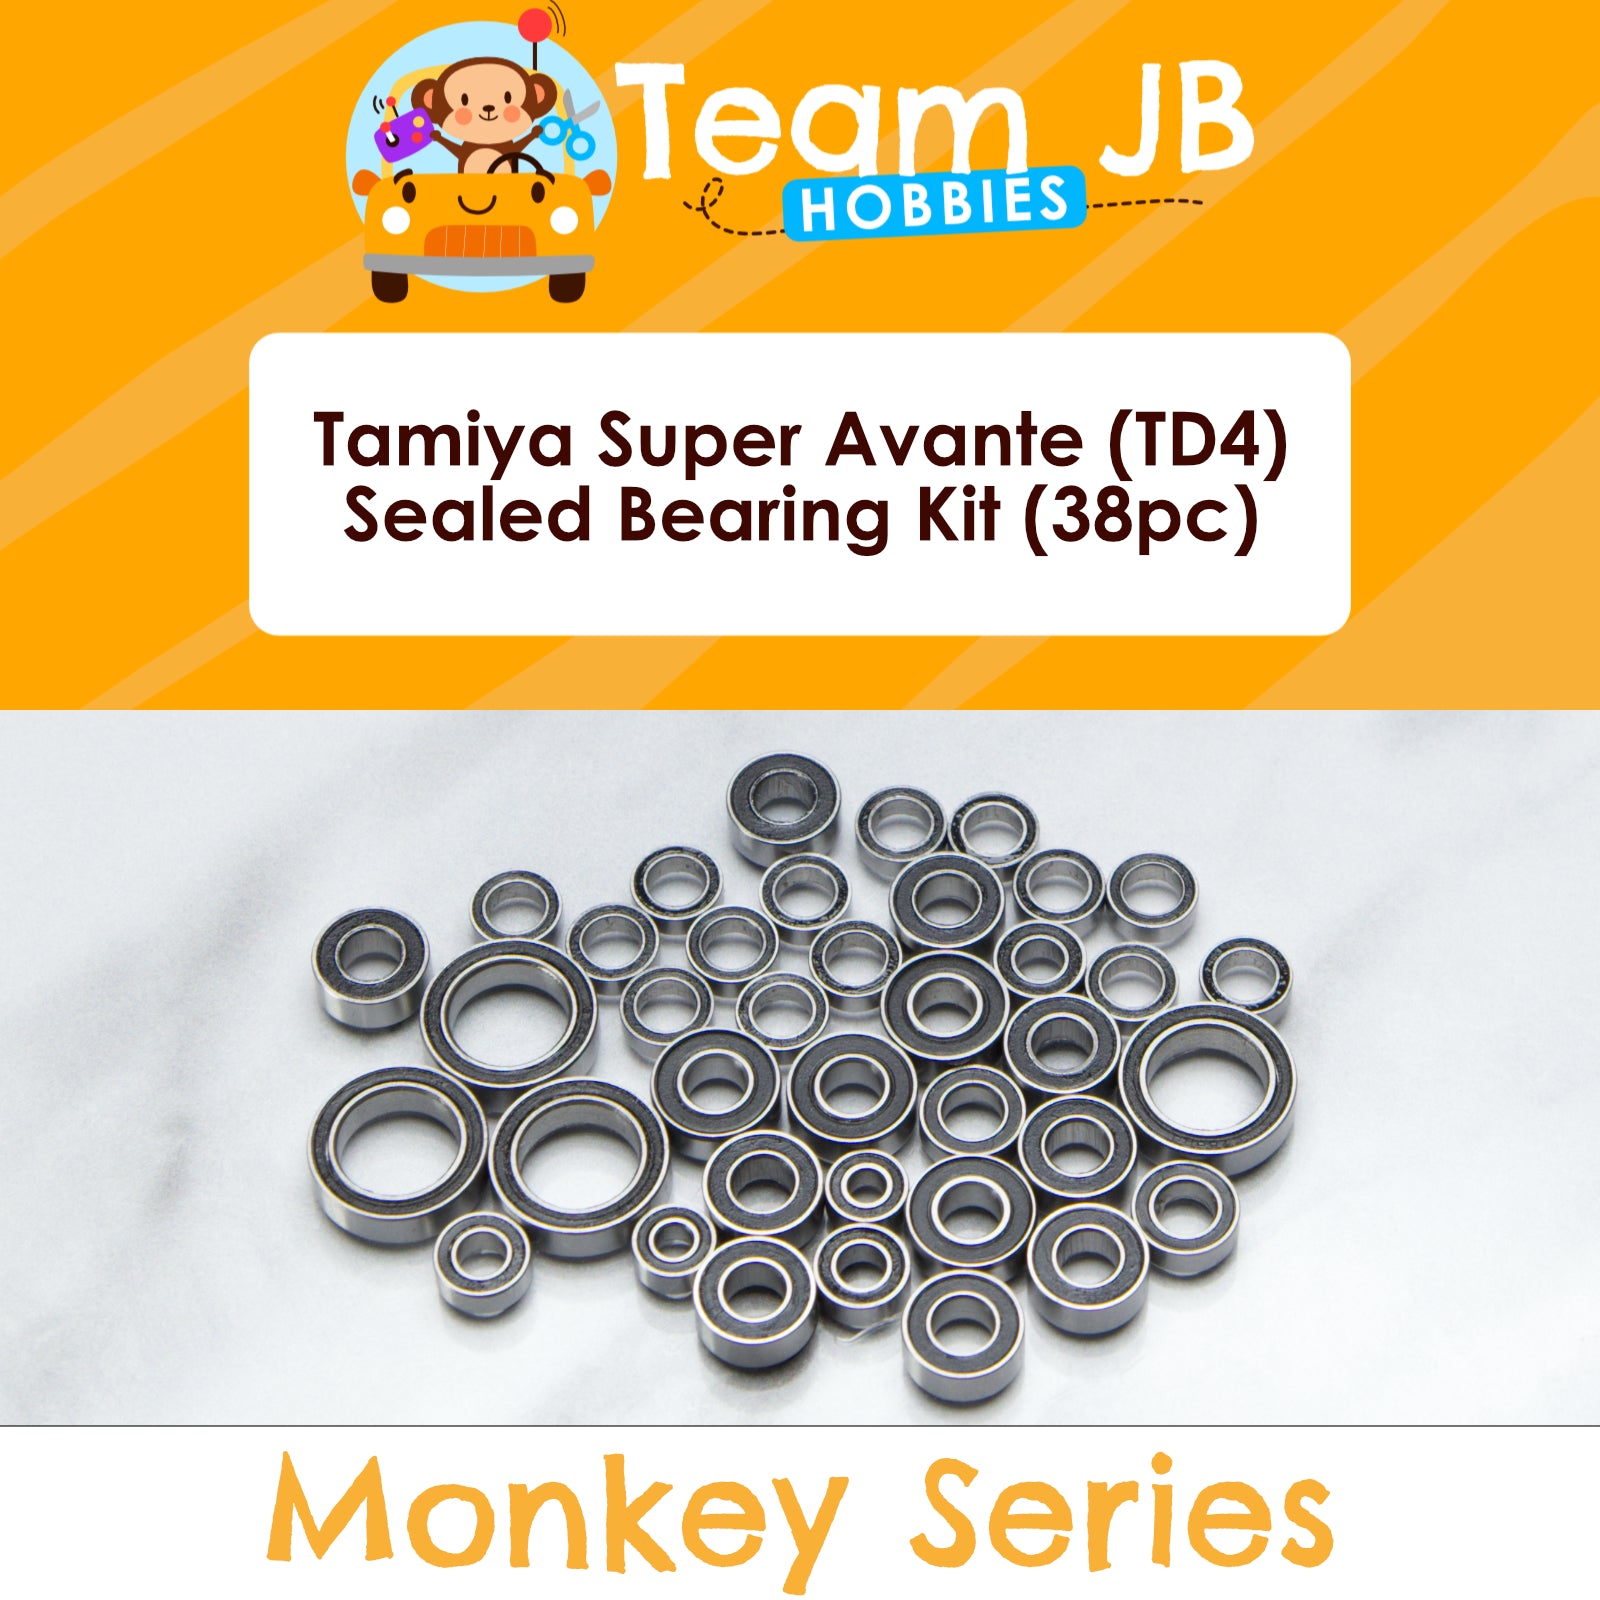 Tamiya Super Avante (TD4) - Sealed Bearing Kit